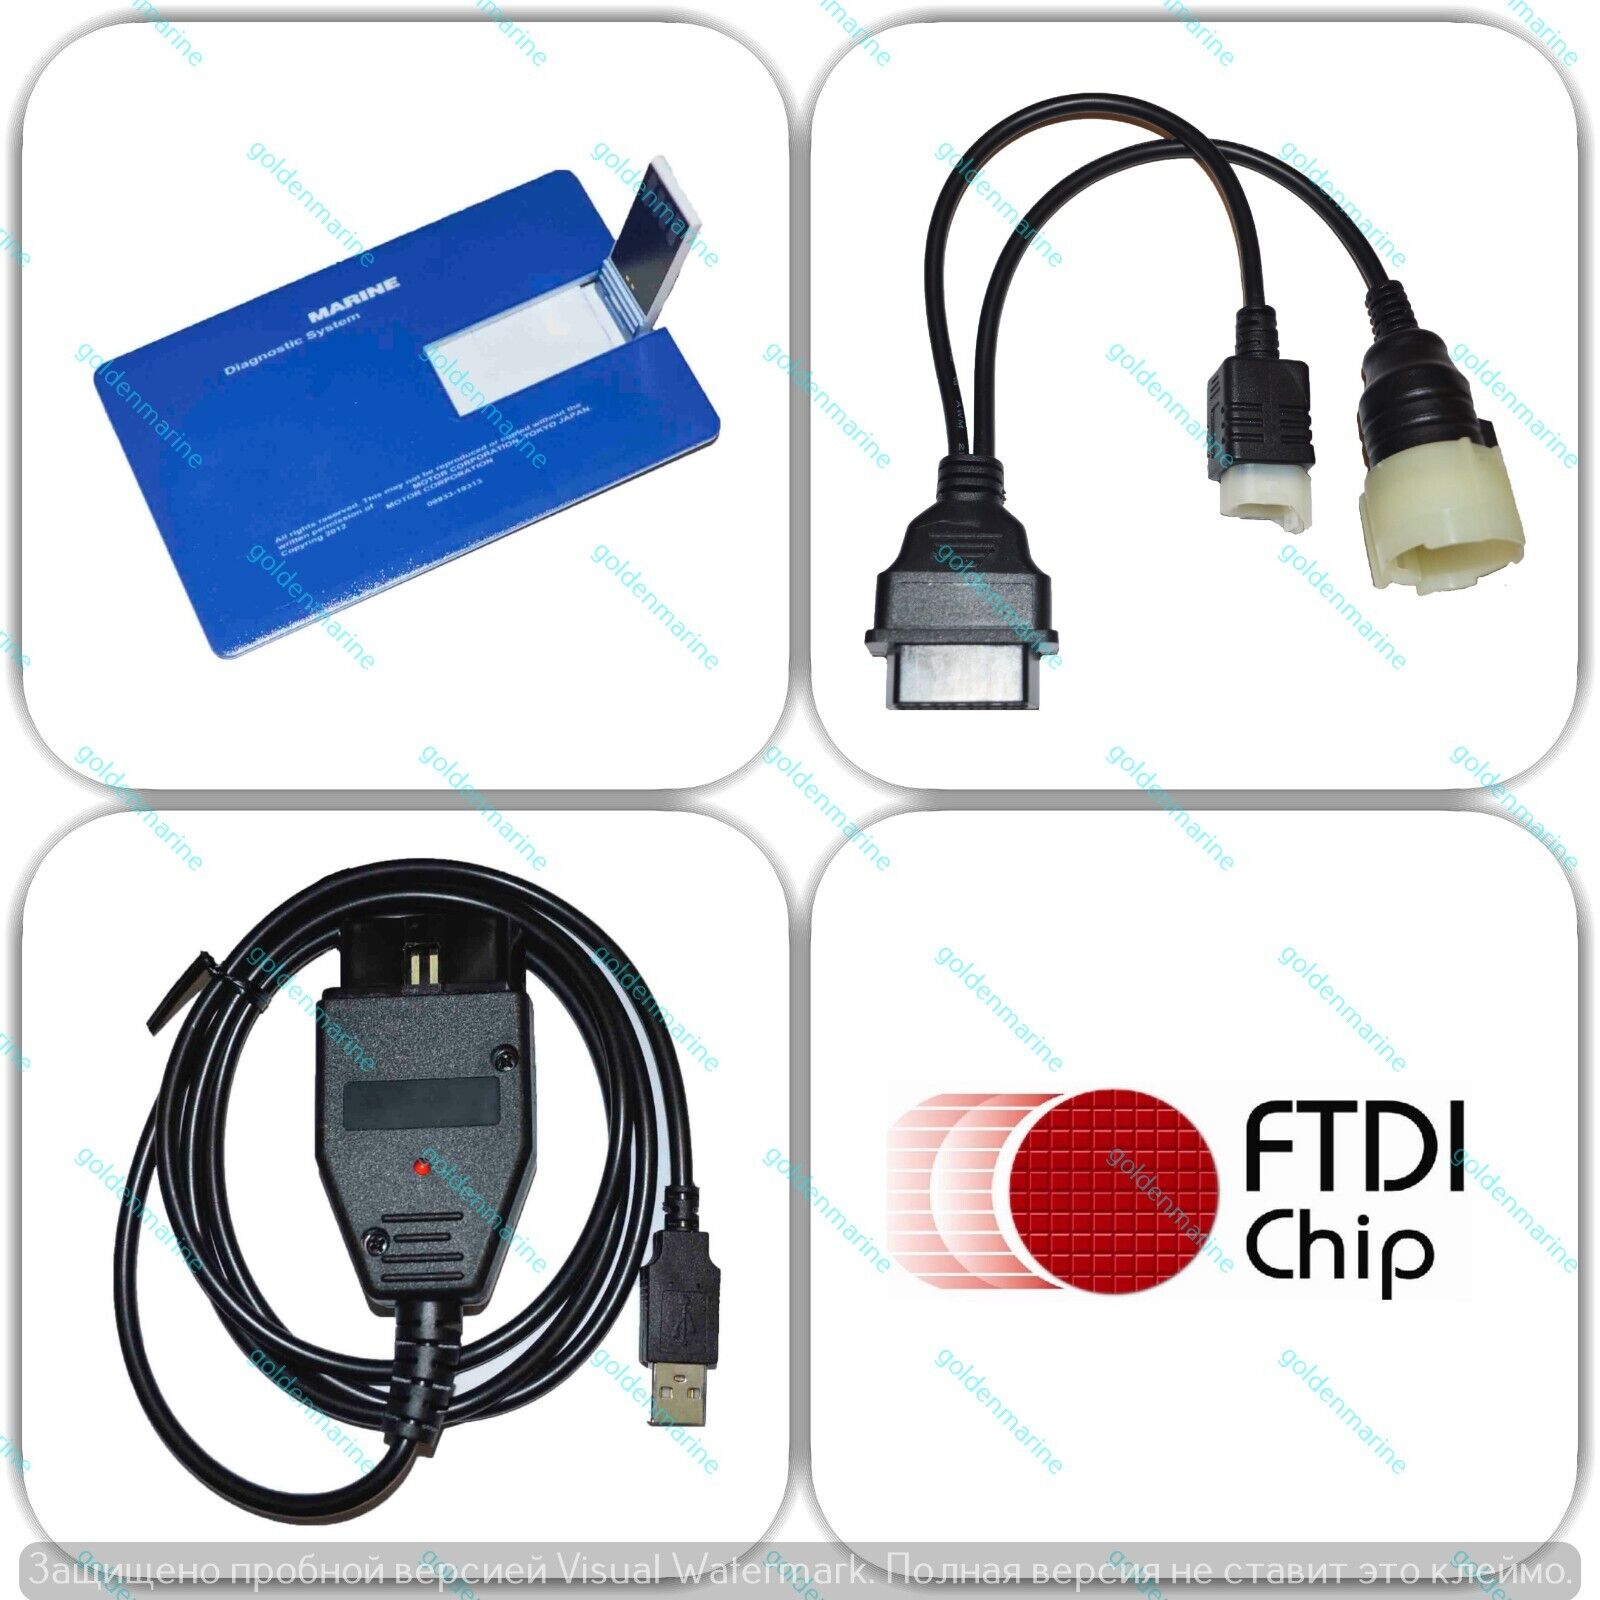 Diagnostic USB Cable Kit for Outboard Boat Suzuki SDS 8.70 Marine